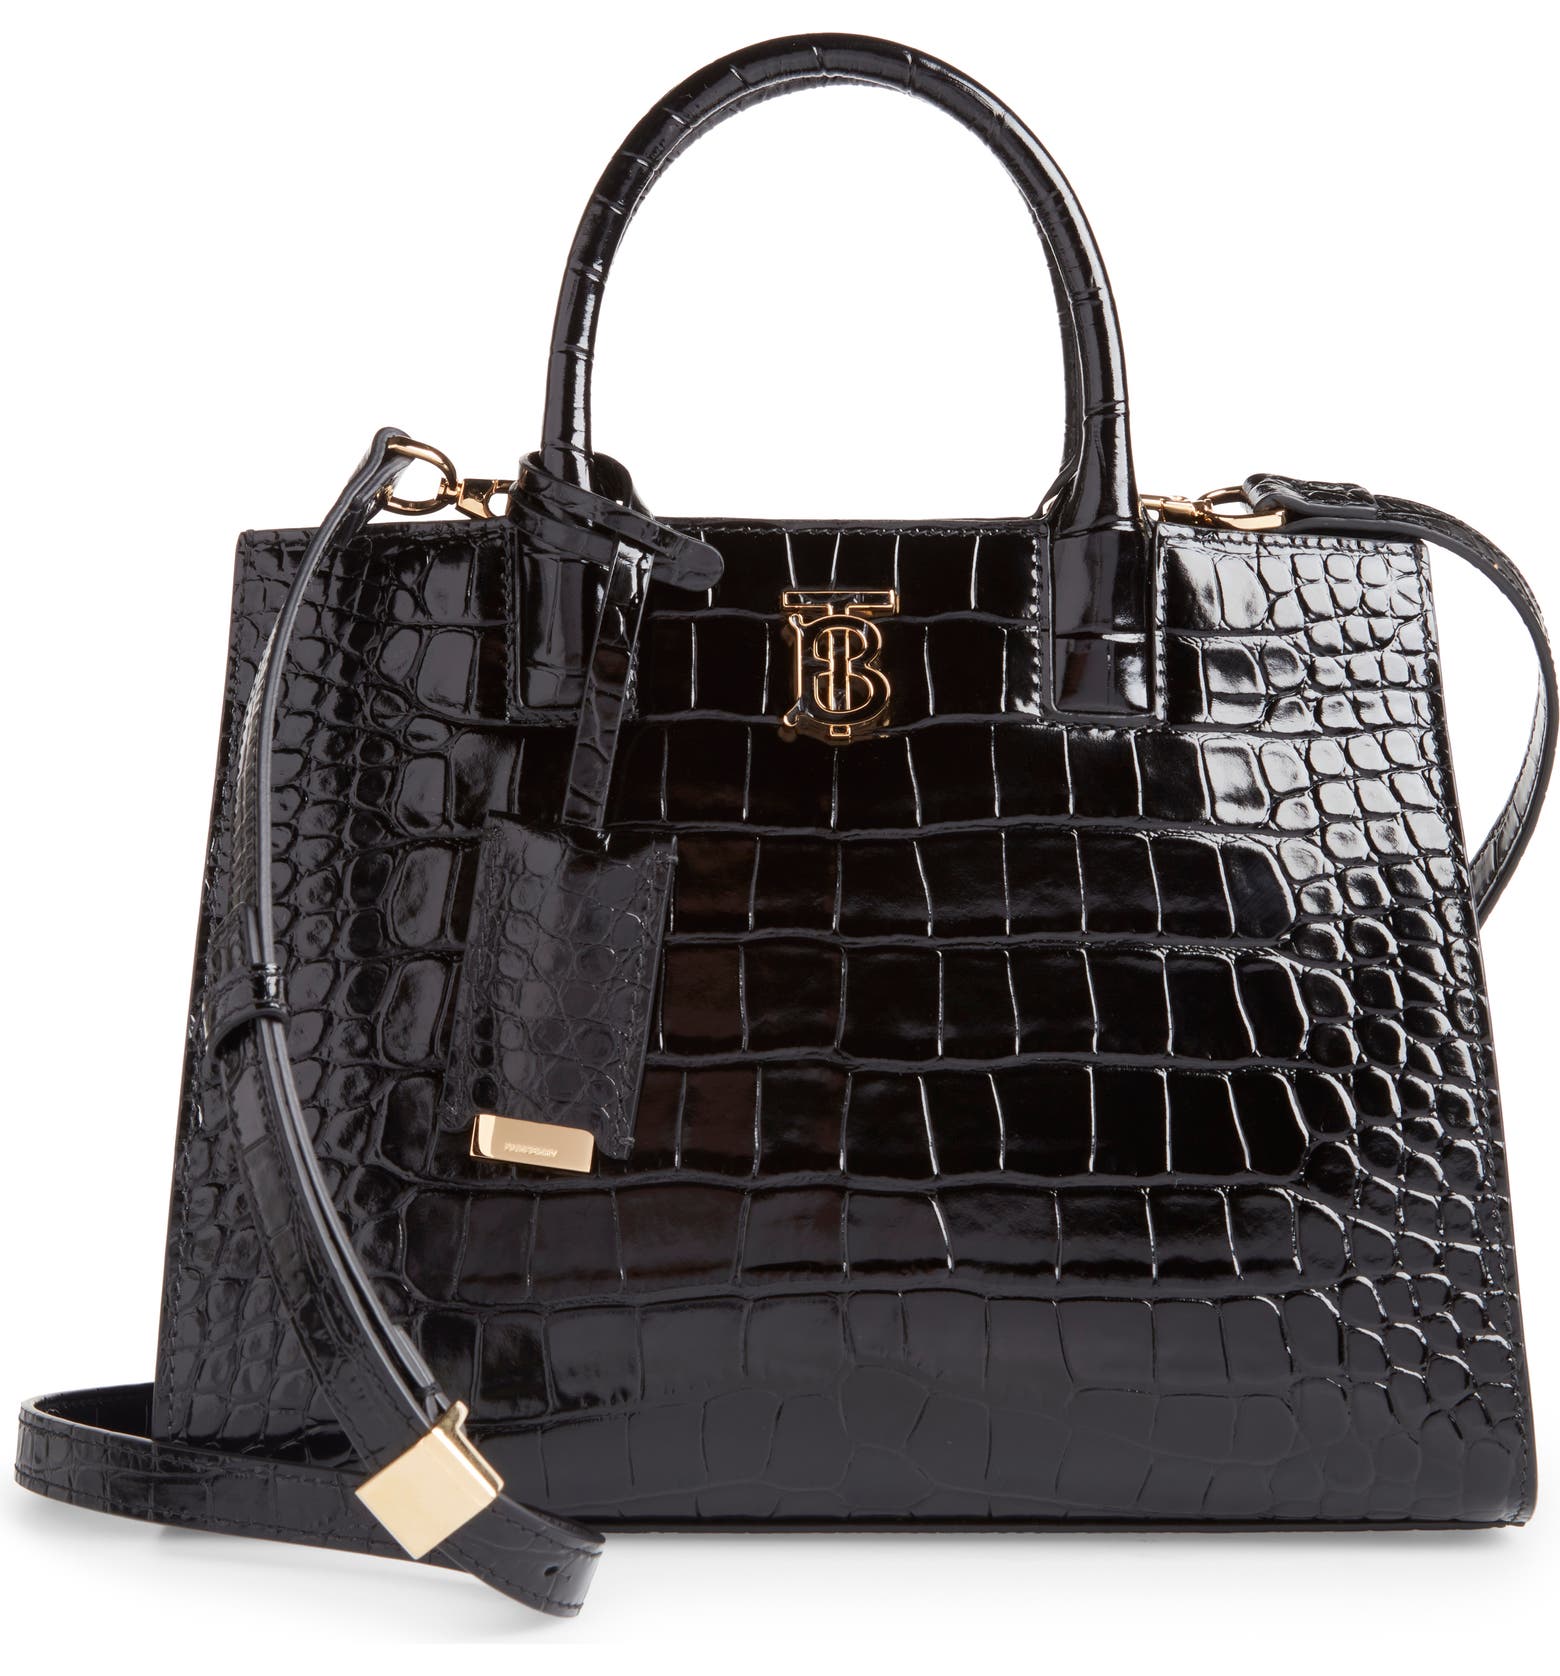 Burberry Leather Frances Bag in black croc effect